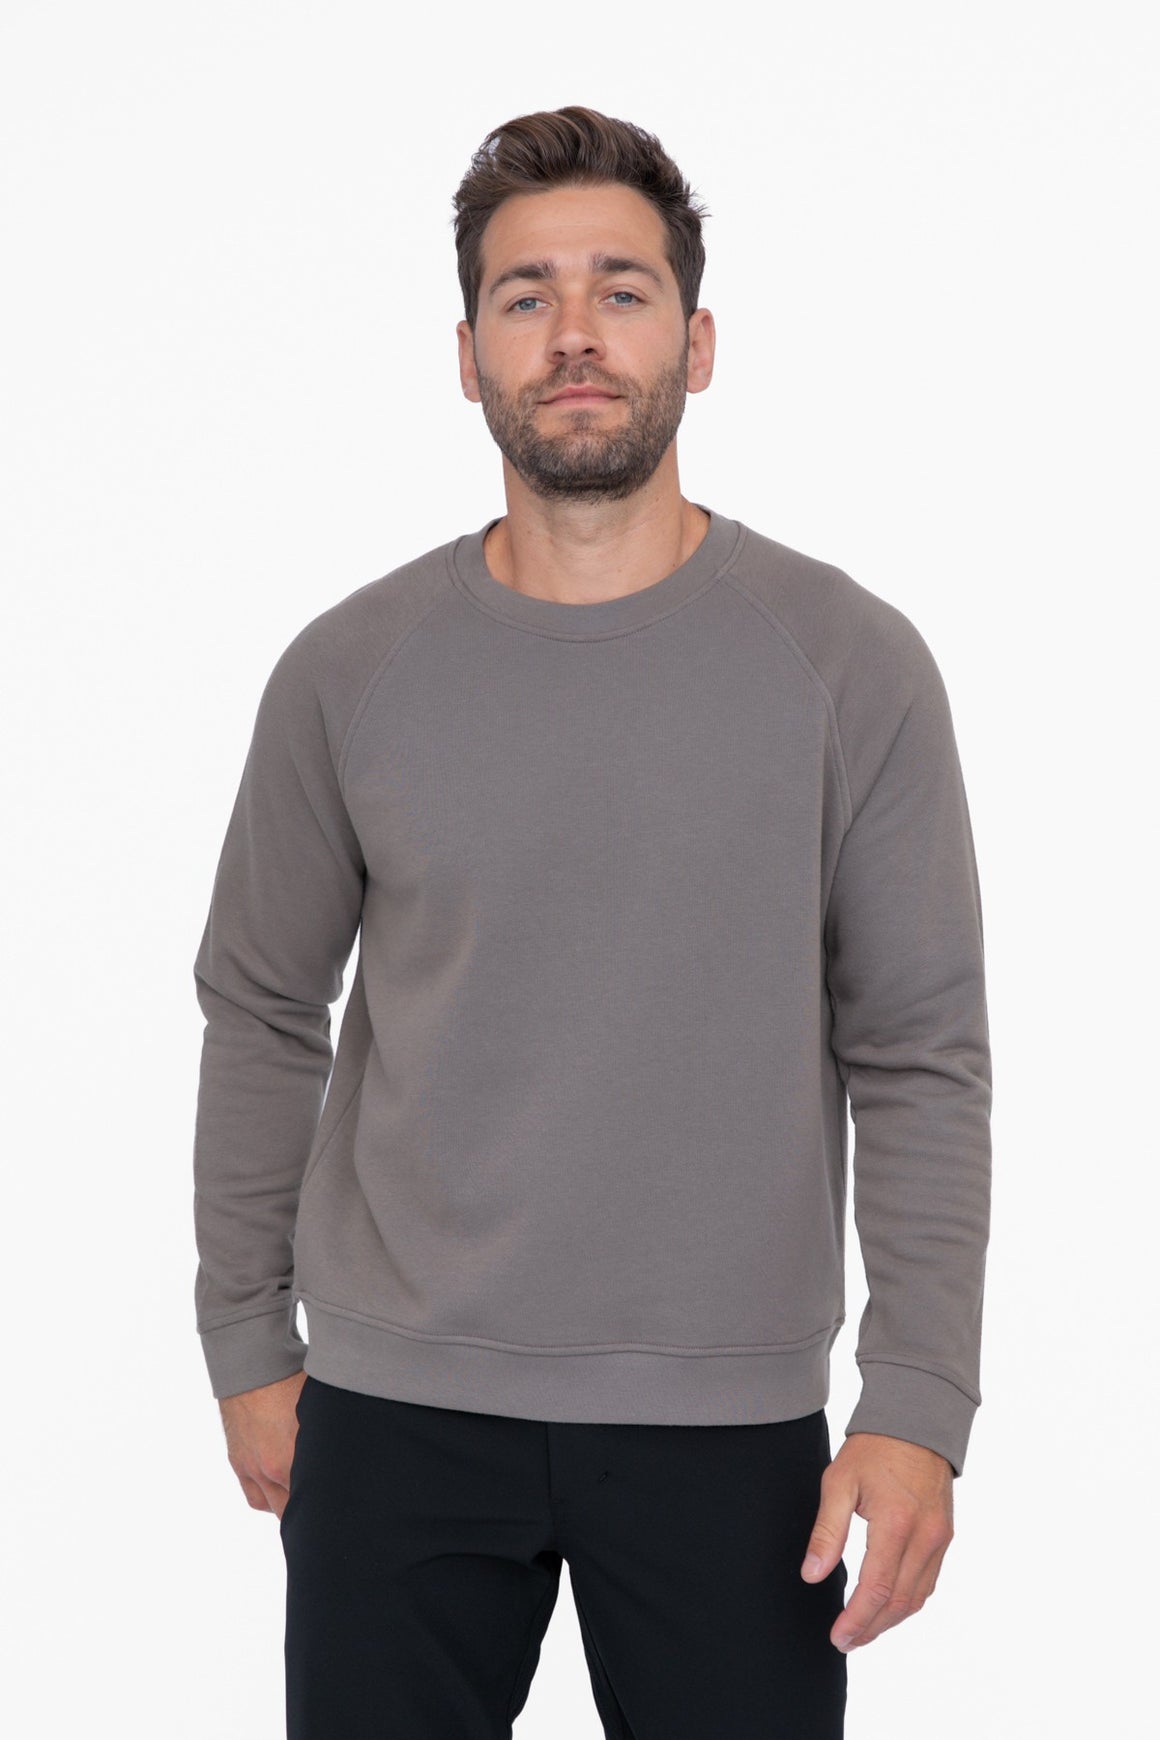 Ronan Classic Crewneck Sweaters- 3 Colors!.